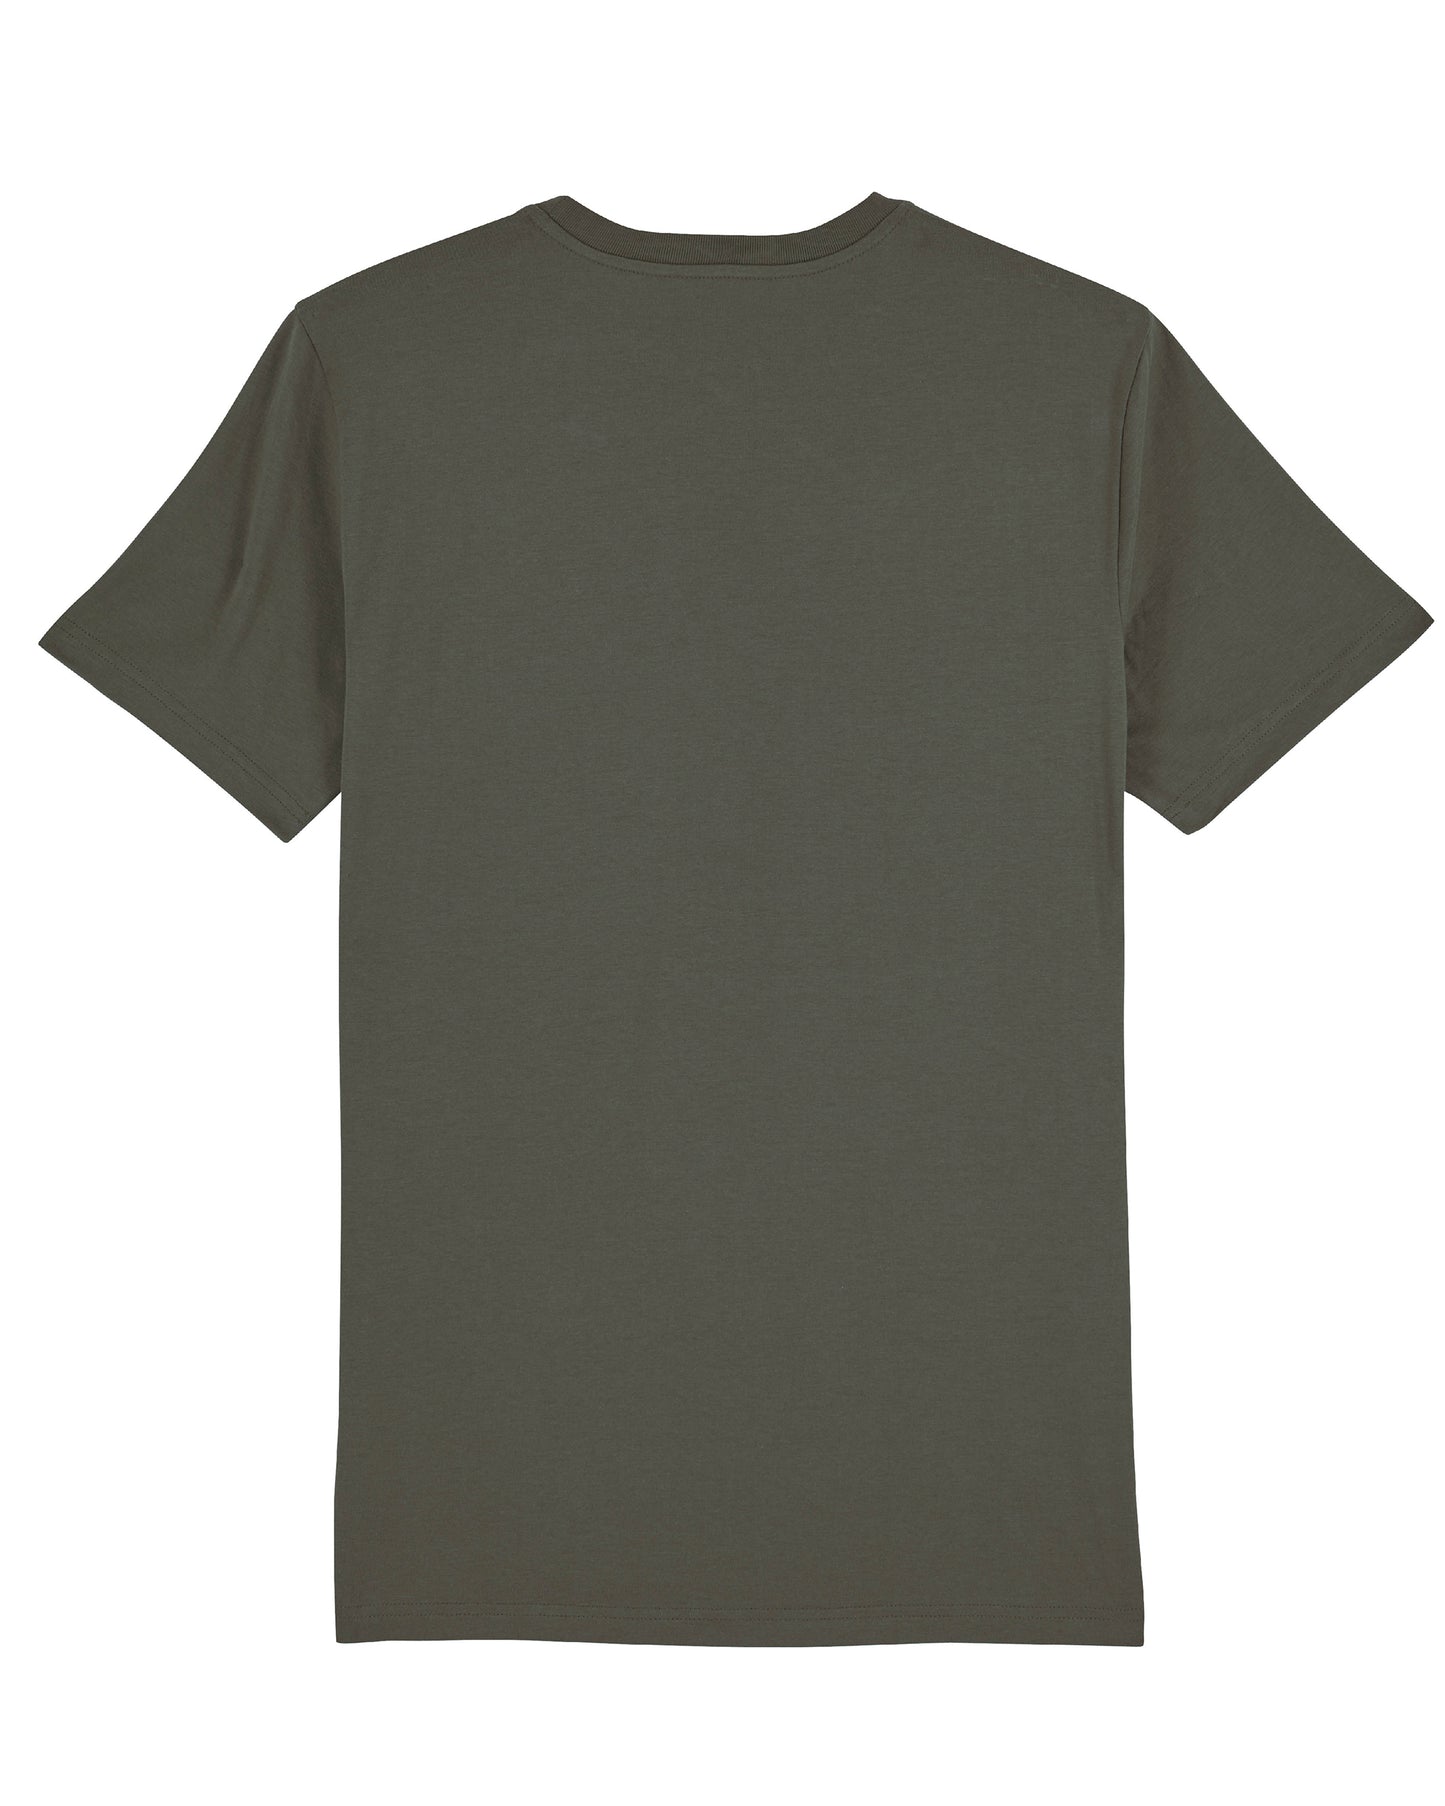 Hang Ten Surfer T-shirt - Khaki